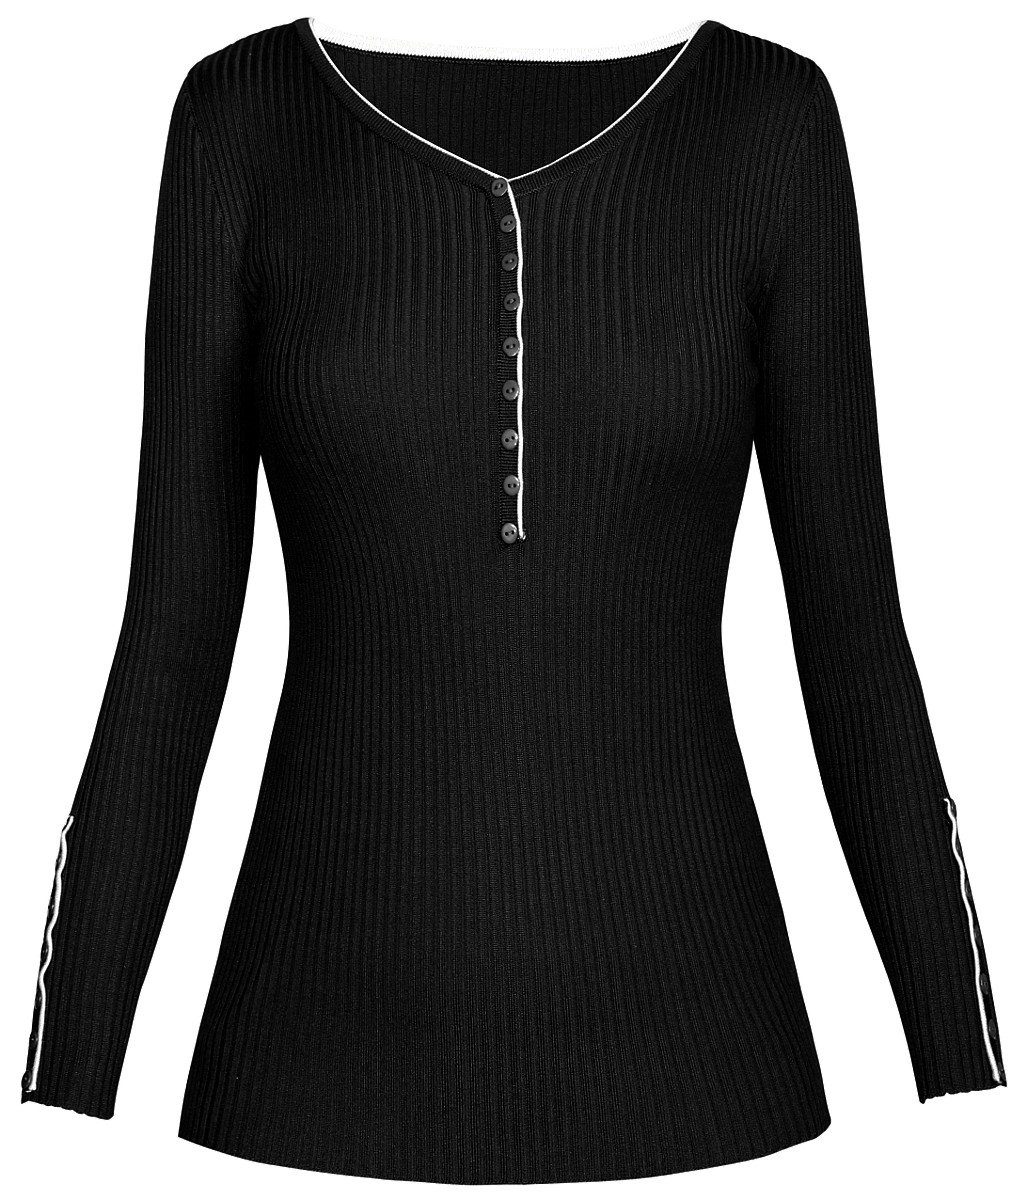 dy_mode V-Ausschnitt-Pullover Damen Pullover Enganliegend Rippenstrick Pulli mit V-Ausschnitt in Unifarbe PUL001-Schwarz